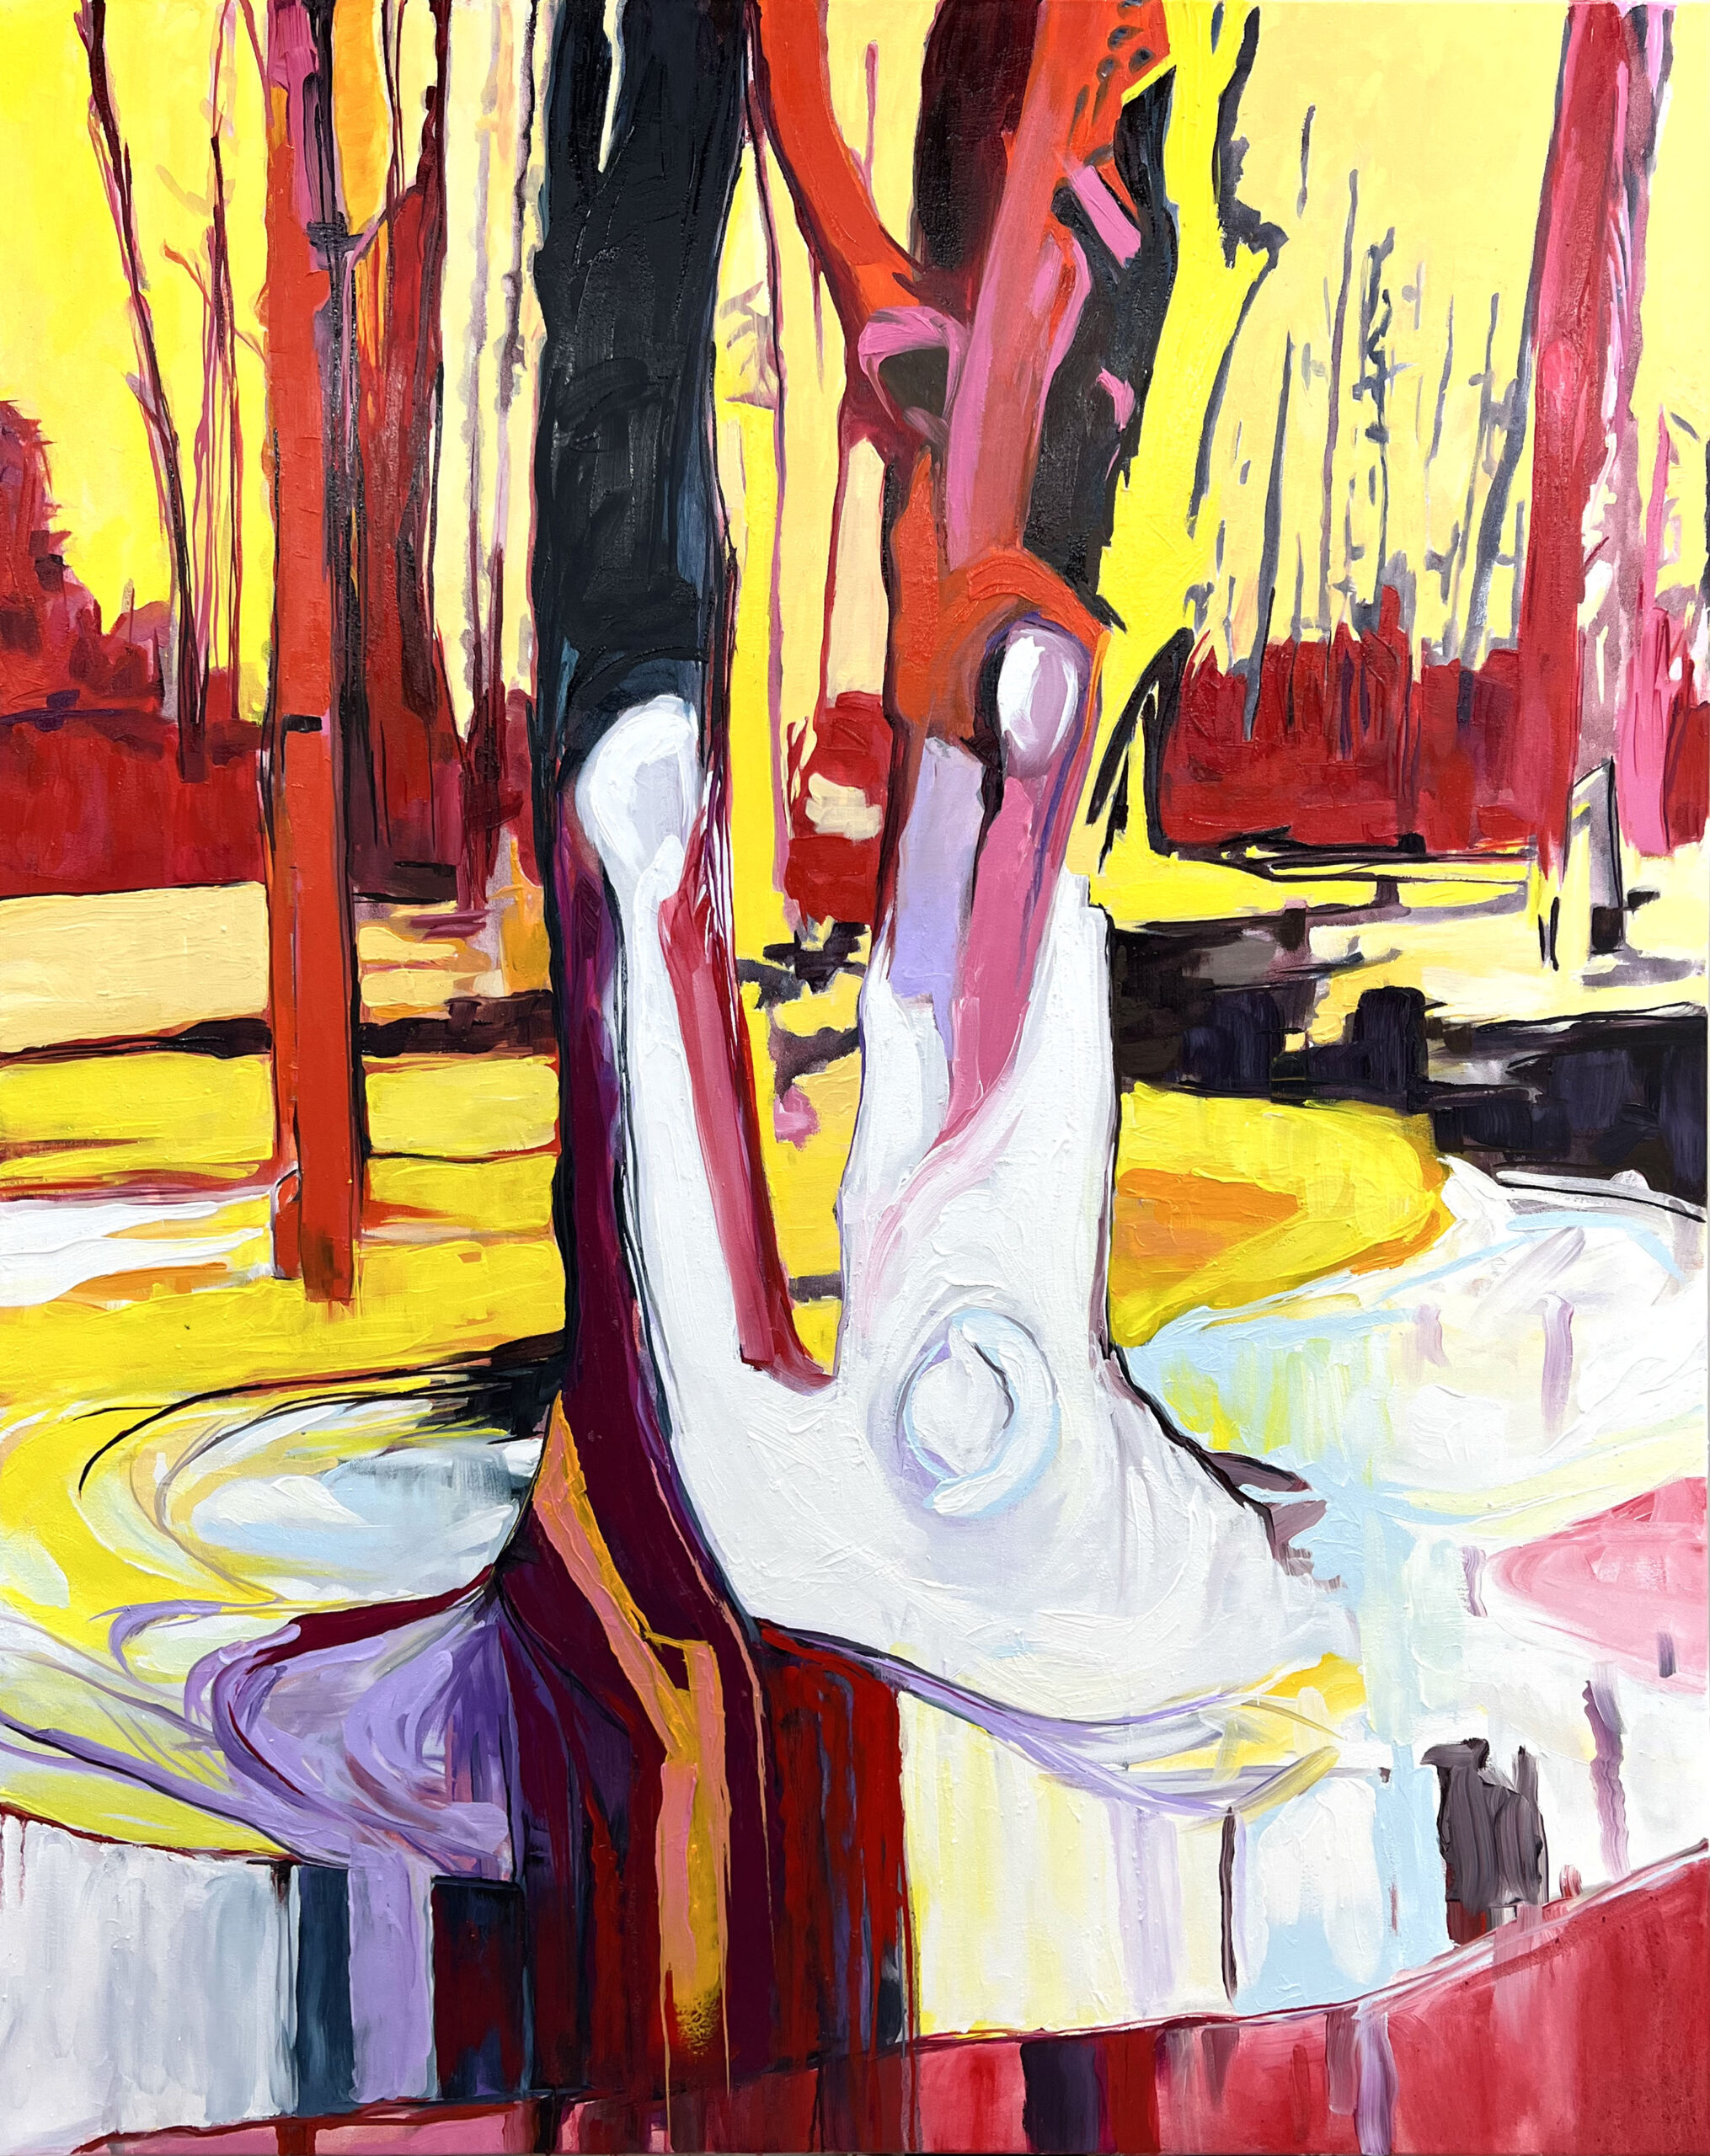 Ann Morgan, Unnatural series, Waiting, Wading, Oil on Canvas, 60 x 48 inches